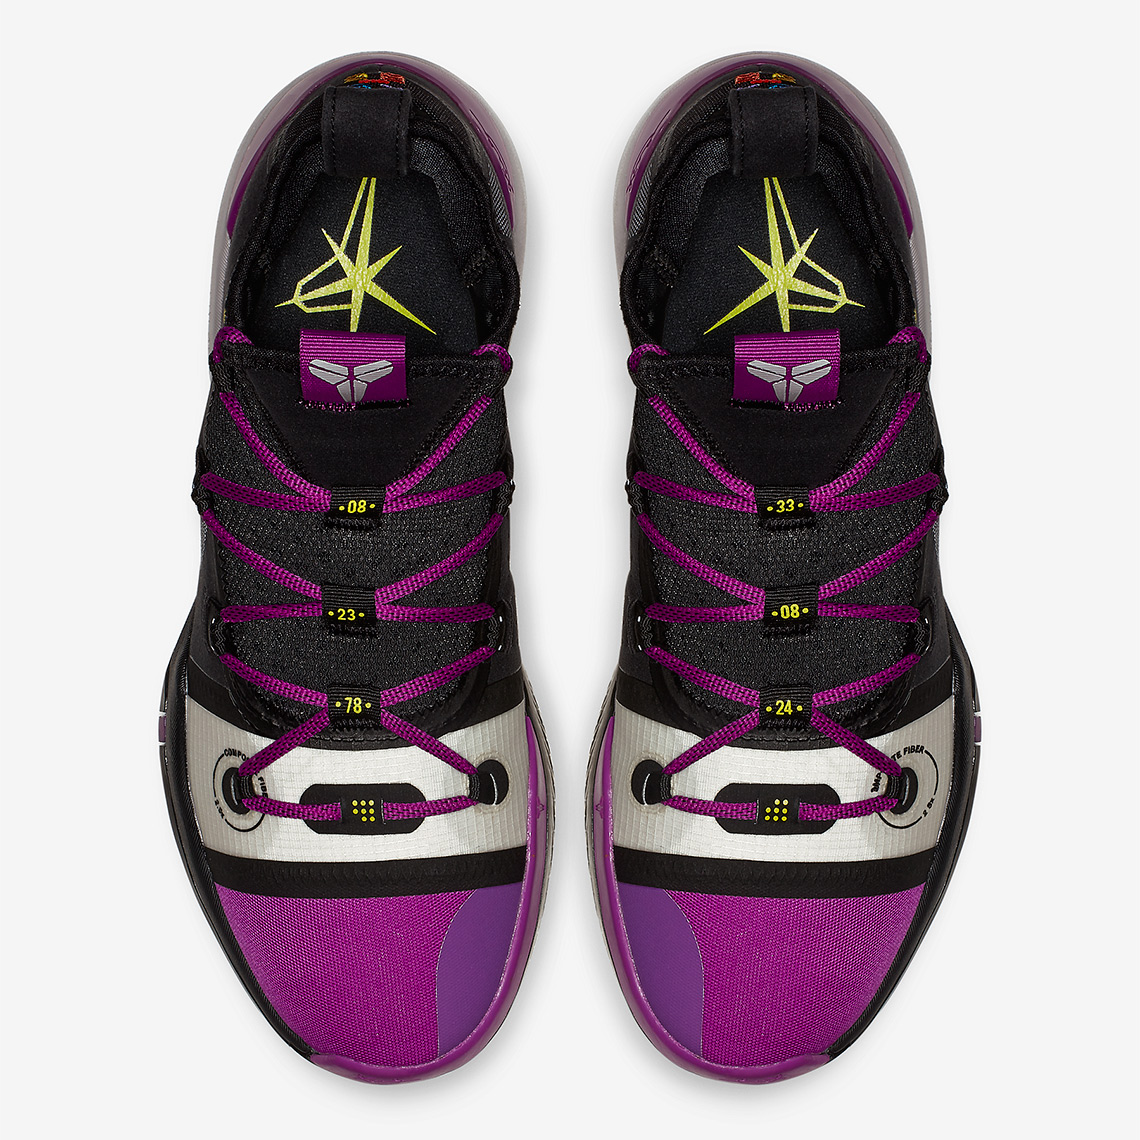 Shoe Nike Kobe AD Purple Black Yellow 